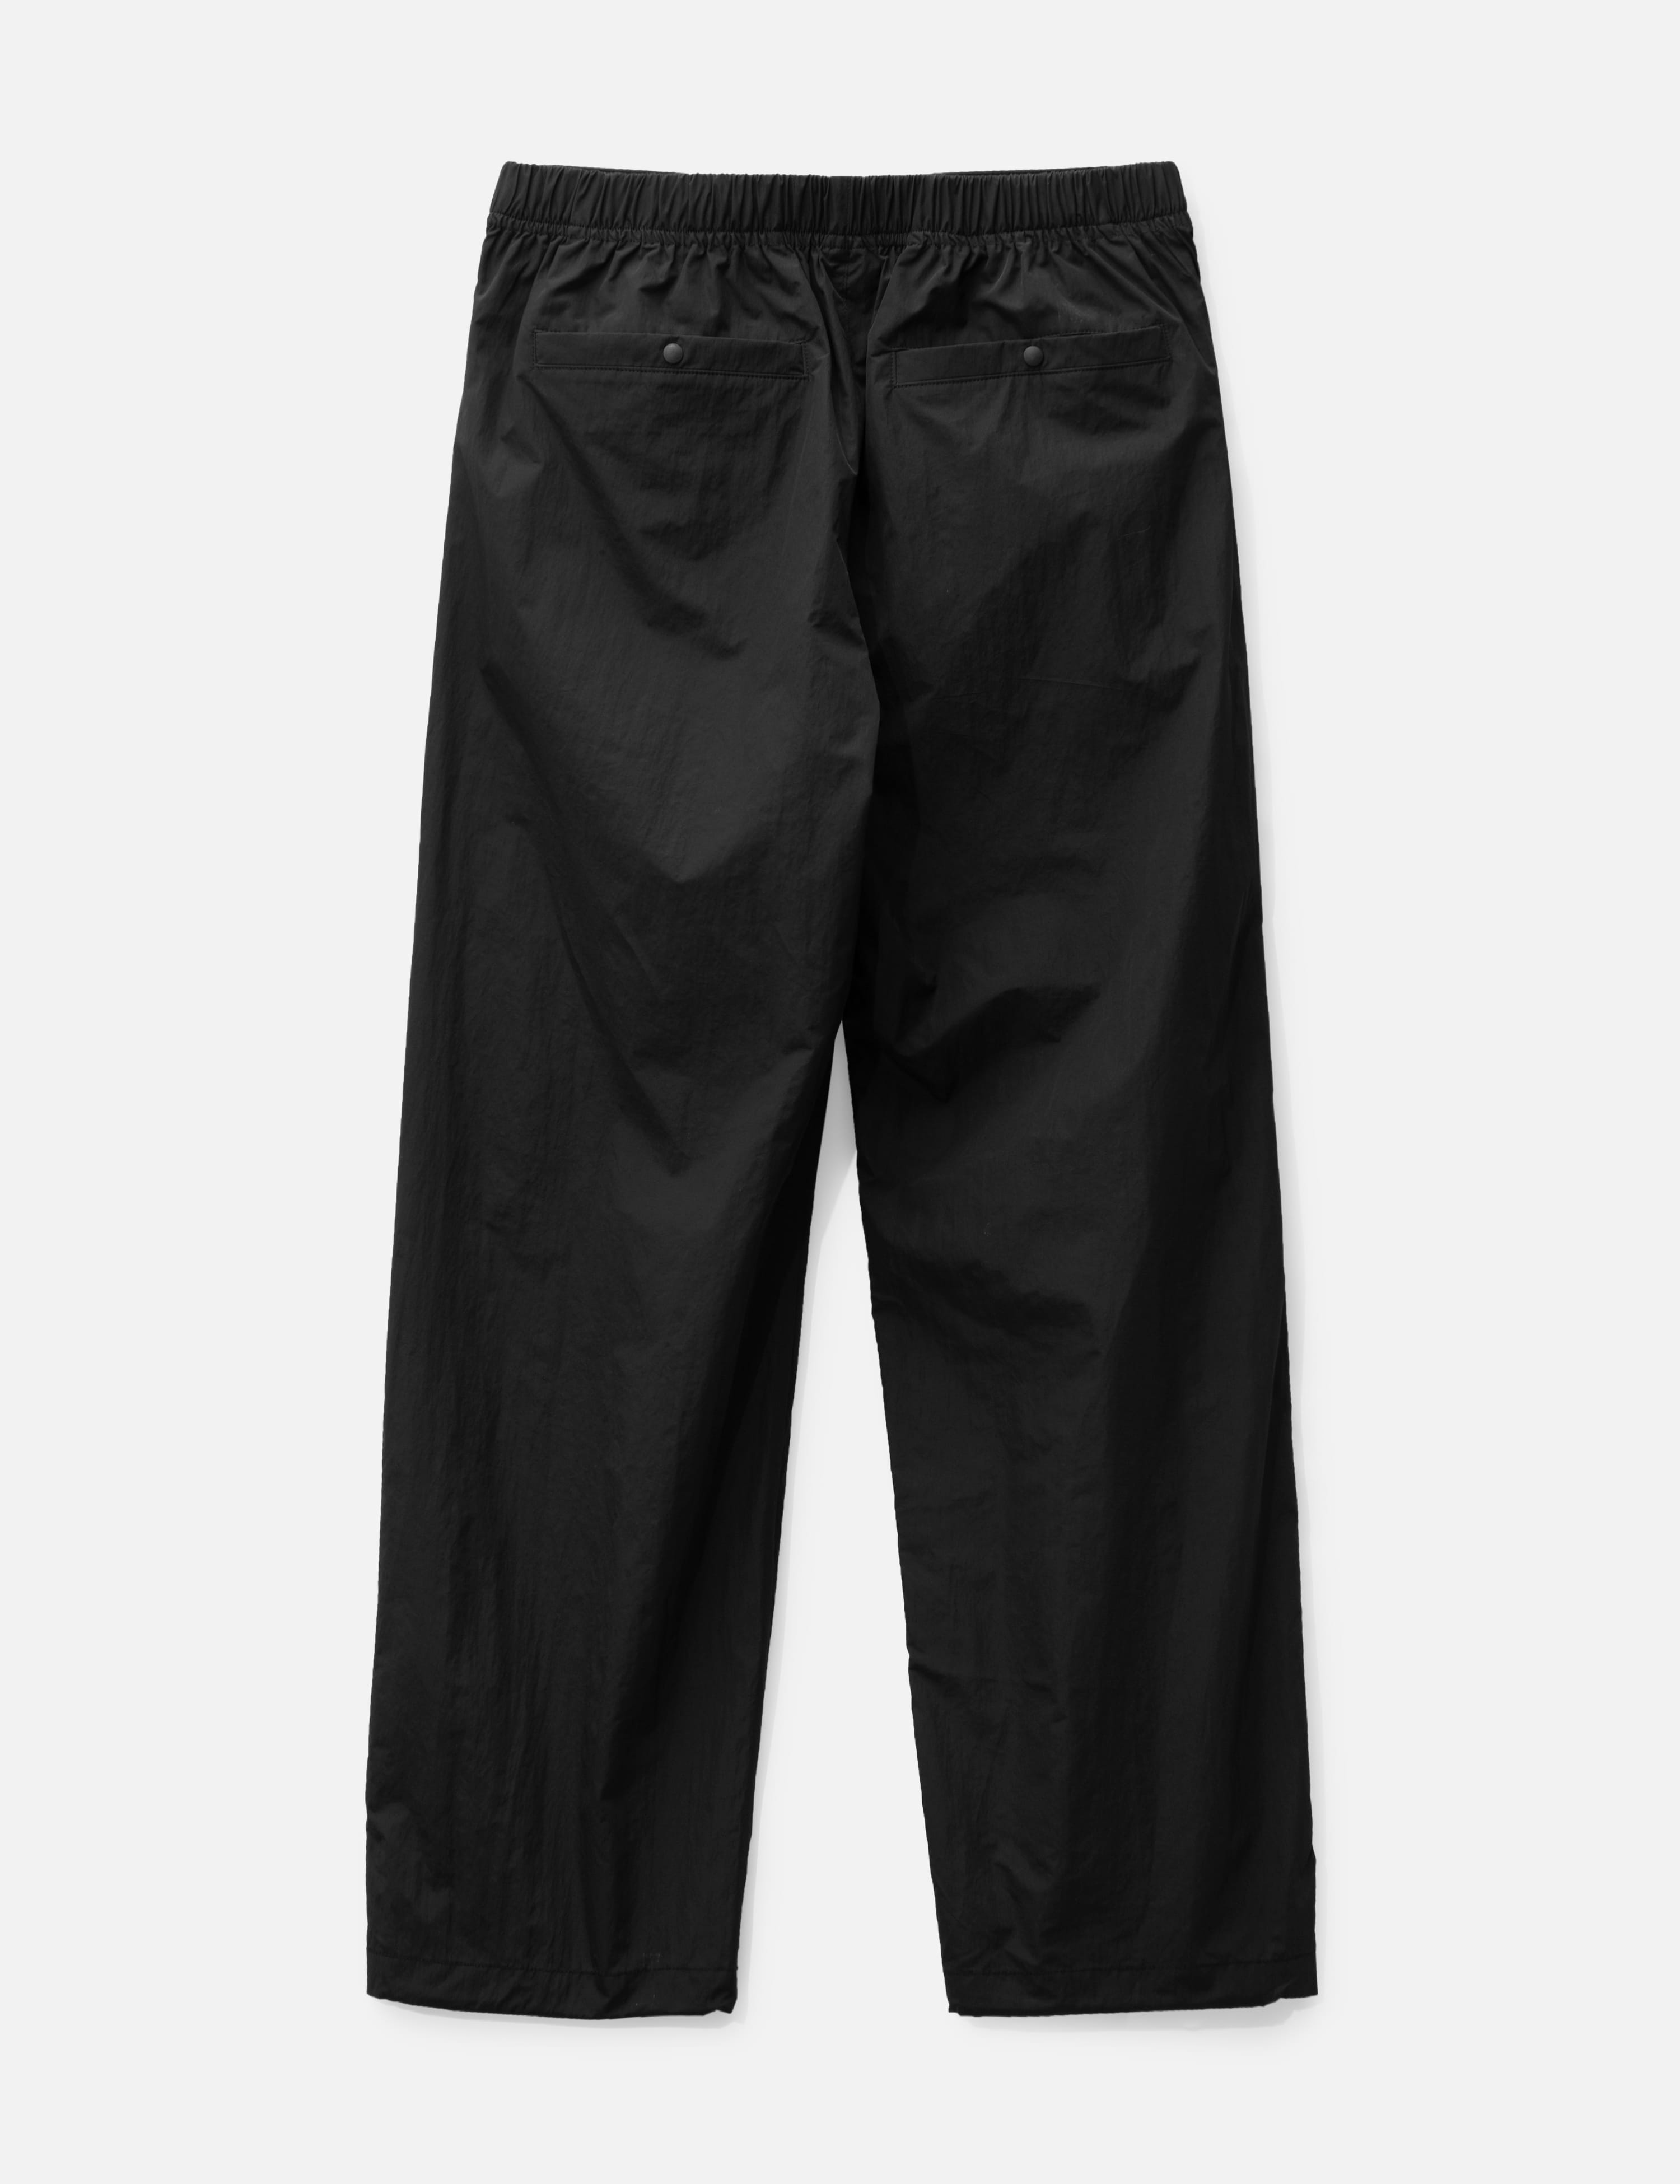 XPONNI Track Pants Women Baggy Pants Y2k Pants Parachute Pants for Women  Y2K Clothing (Black,XS,X-Small) at Amazon Women's Clothing store